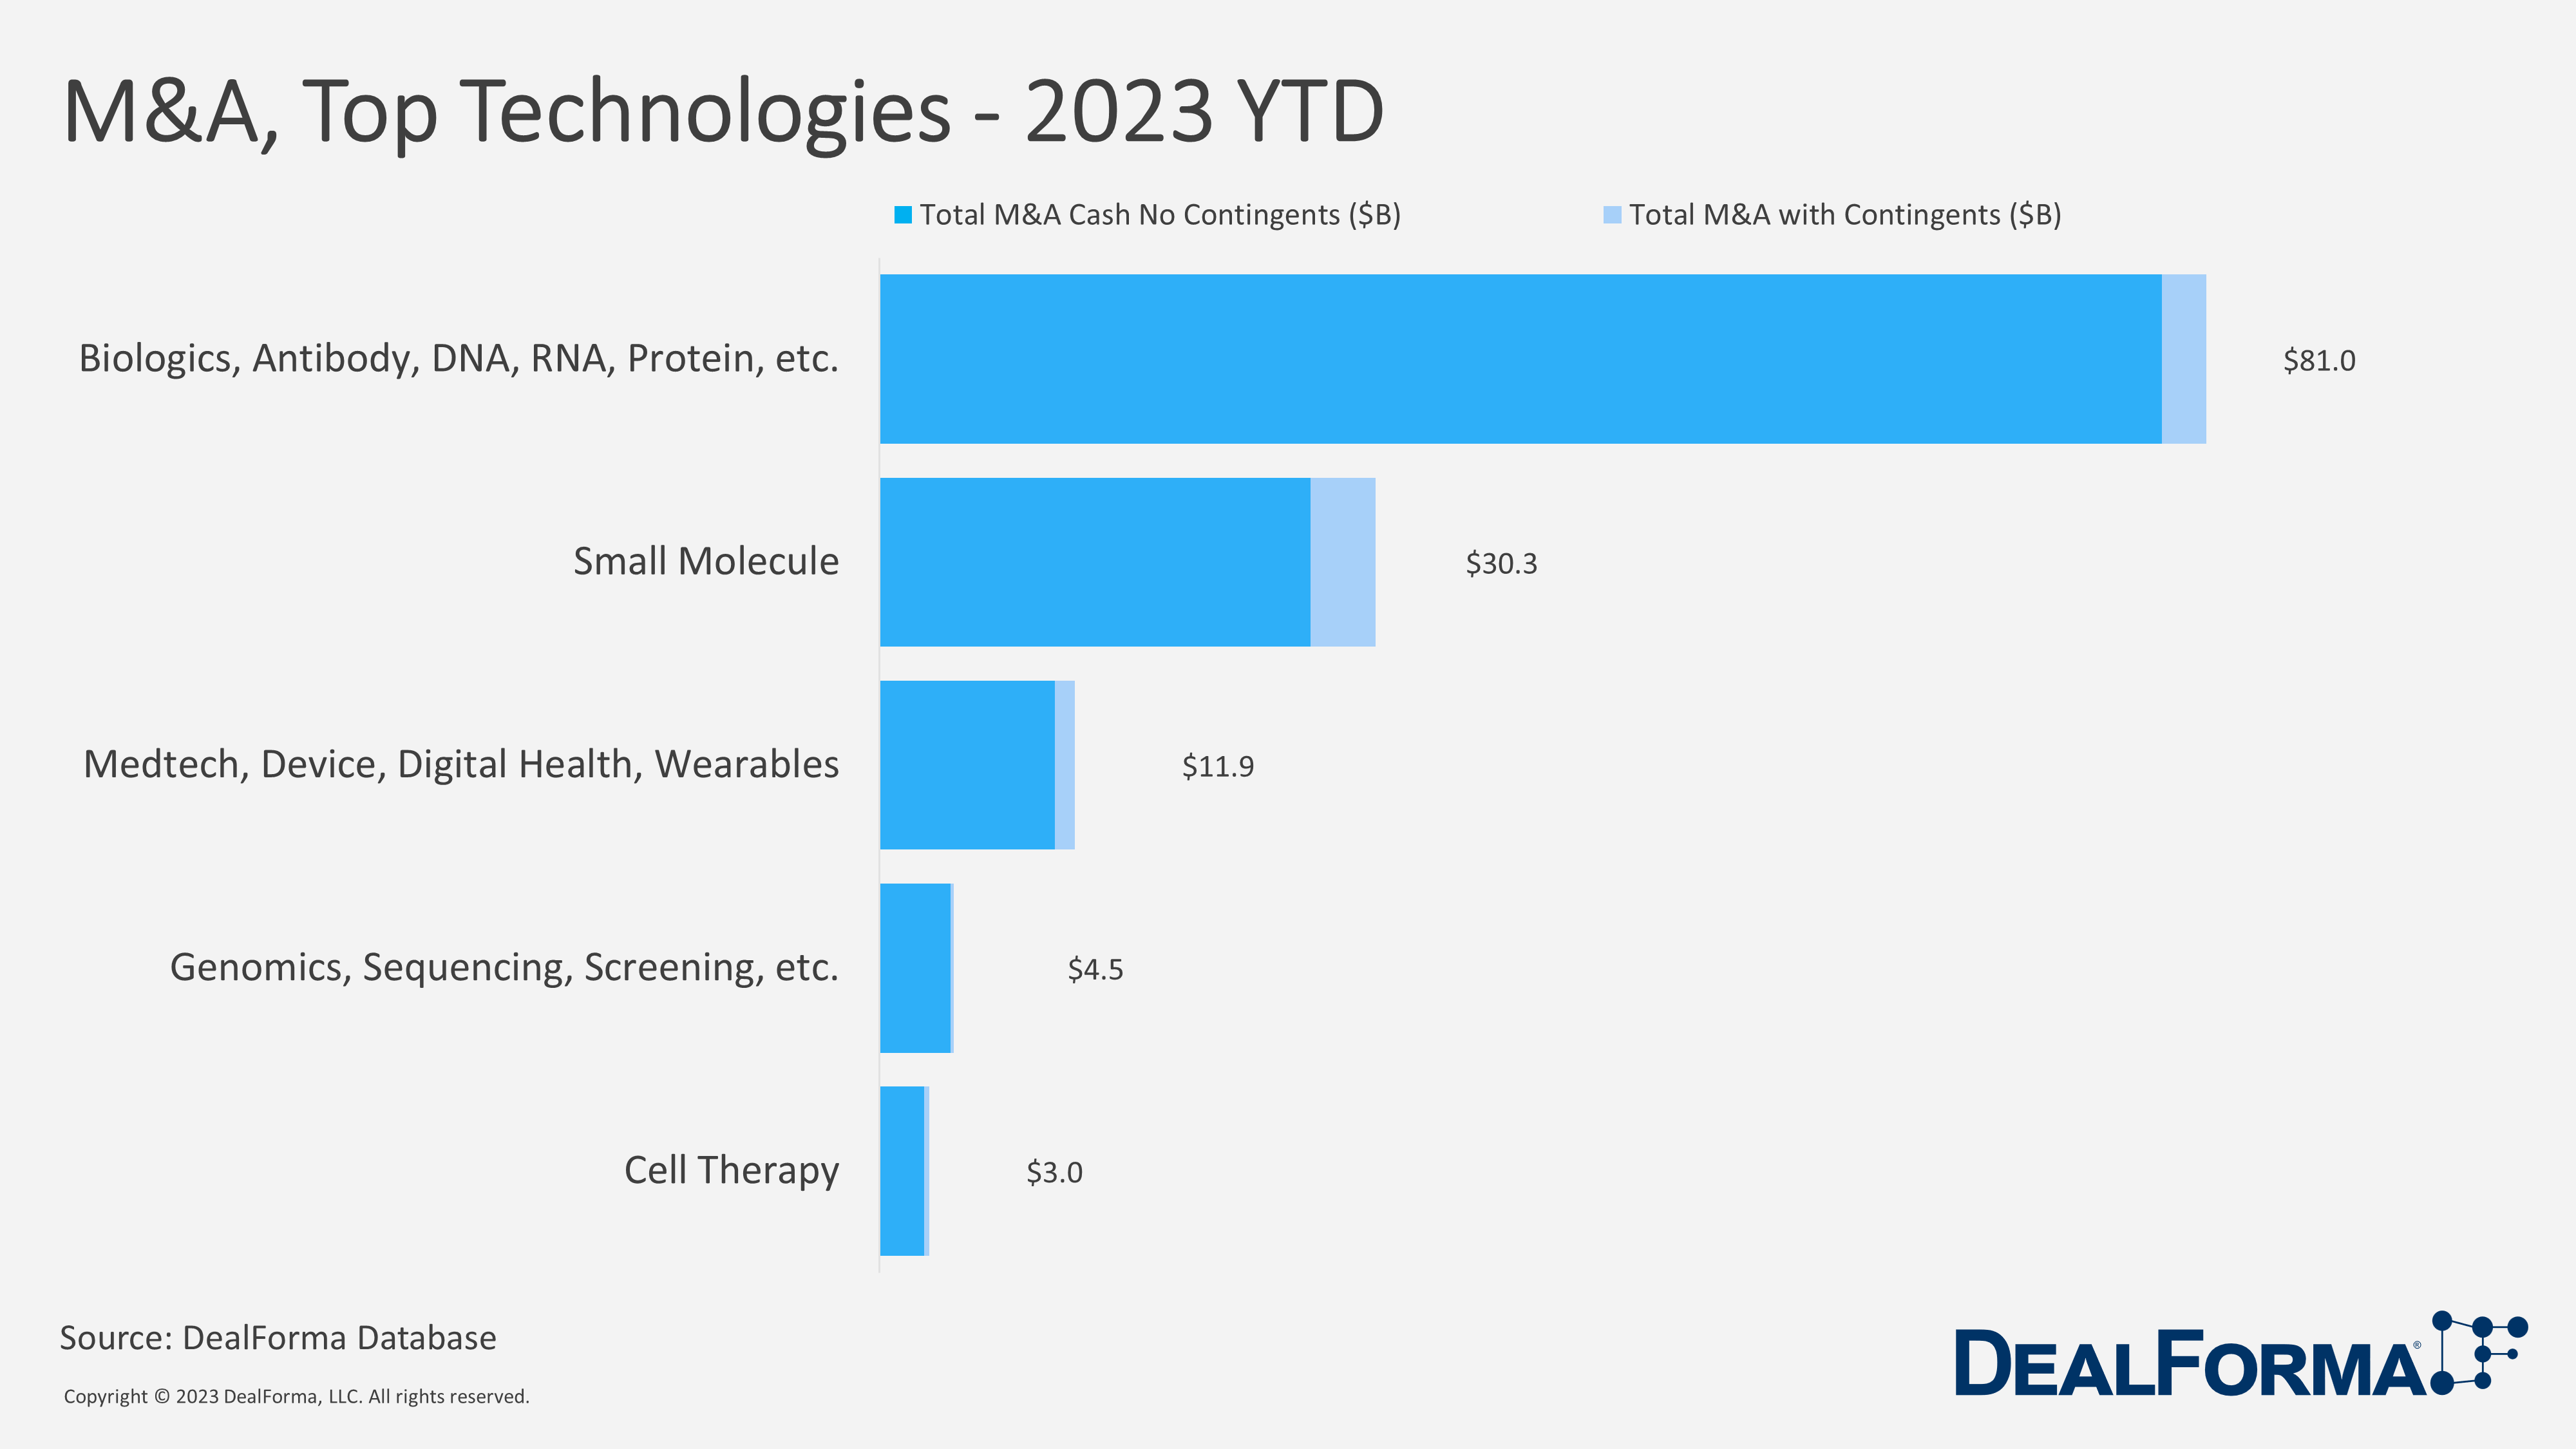 M&A Top Technologies 2023 YTD - DealForma